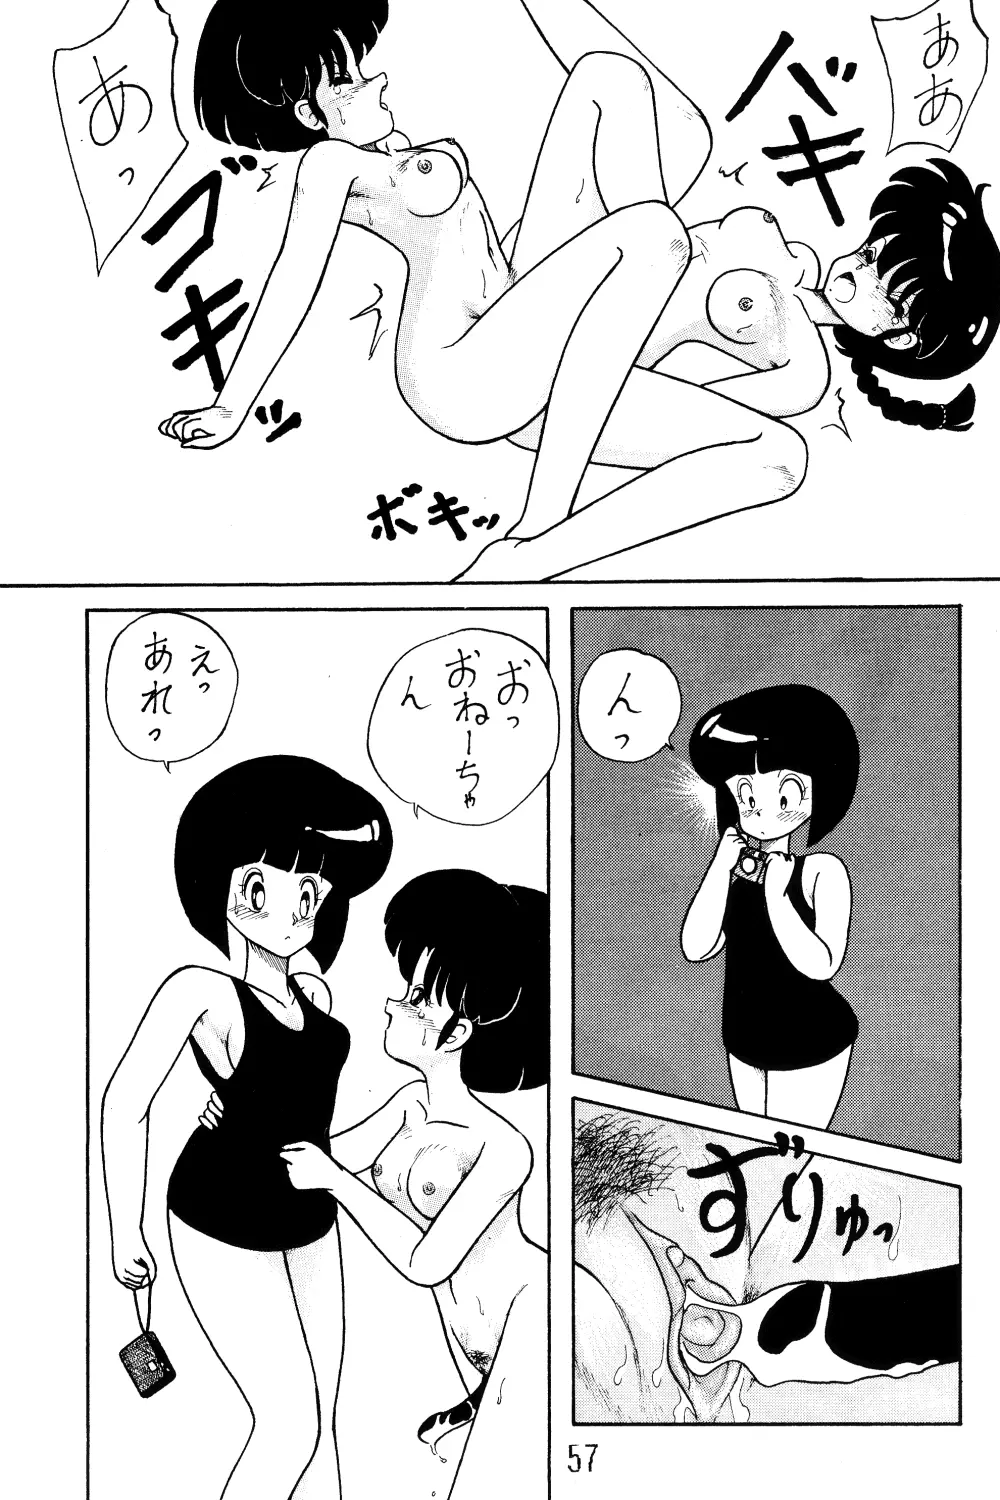 NOTORIOUS らんま1/2 スペシャル - page56